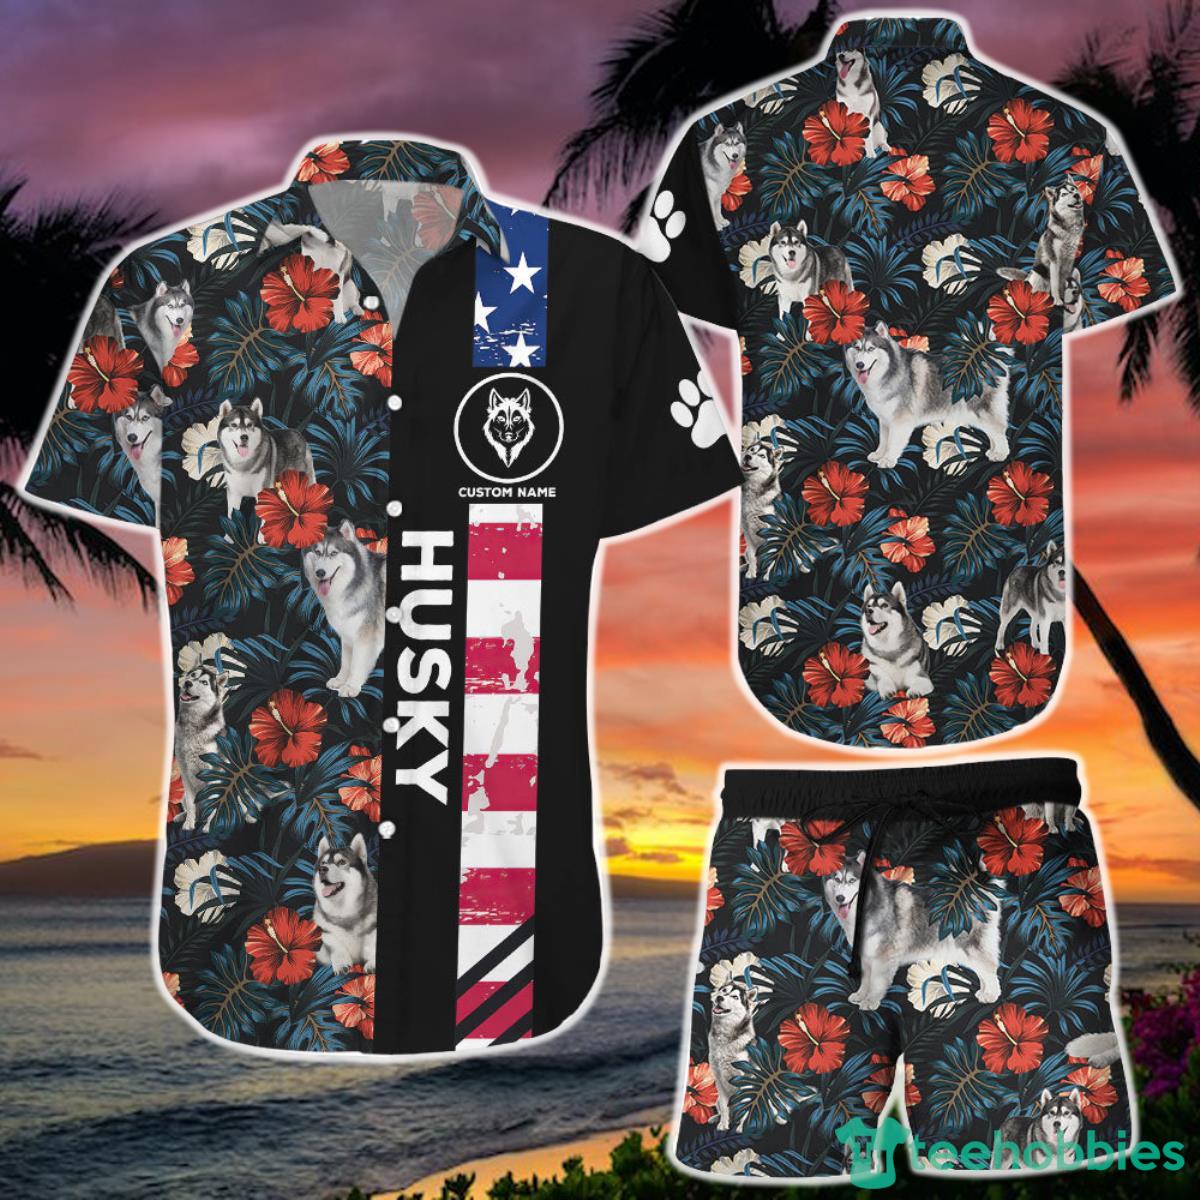 Custom Name Husky American Flag Tropical Hawaii Shirt and Short Funny LGBT Gifts Product Photo 1